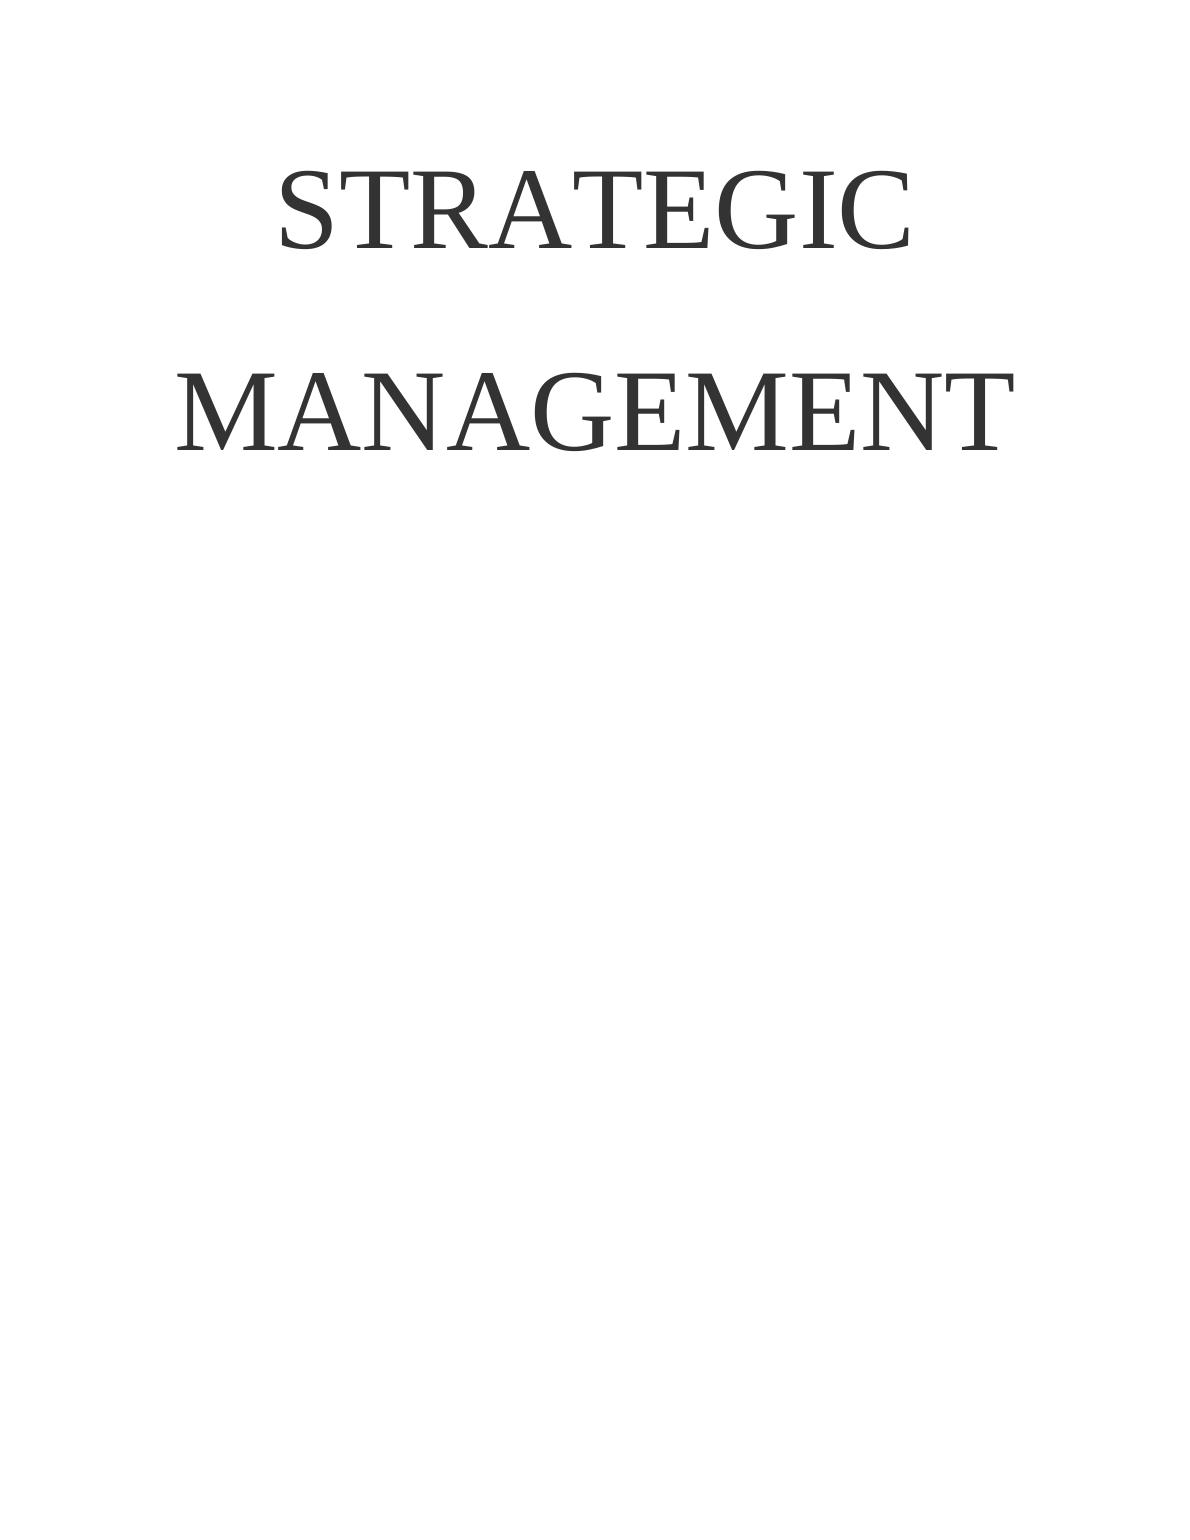 Strategic Management: Steve Rowe's Contribution and Change Management at Marks & Spencer_1